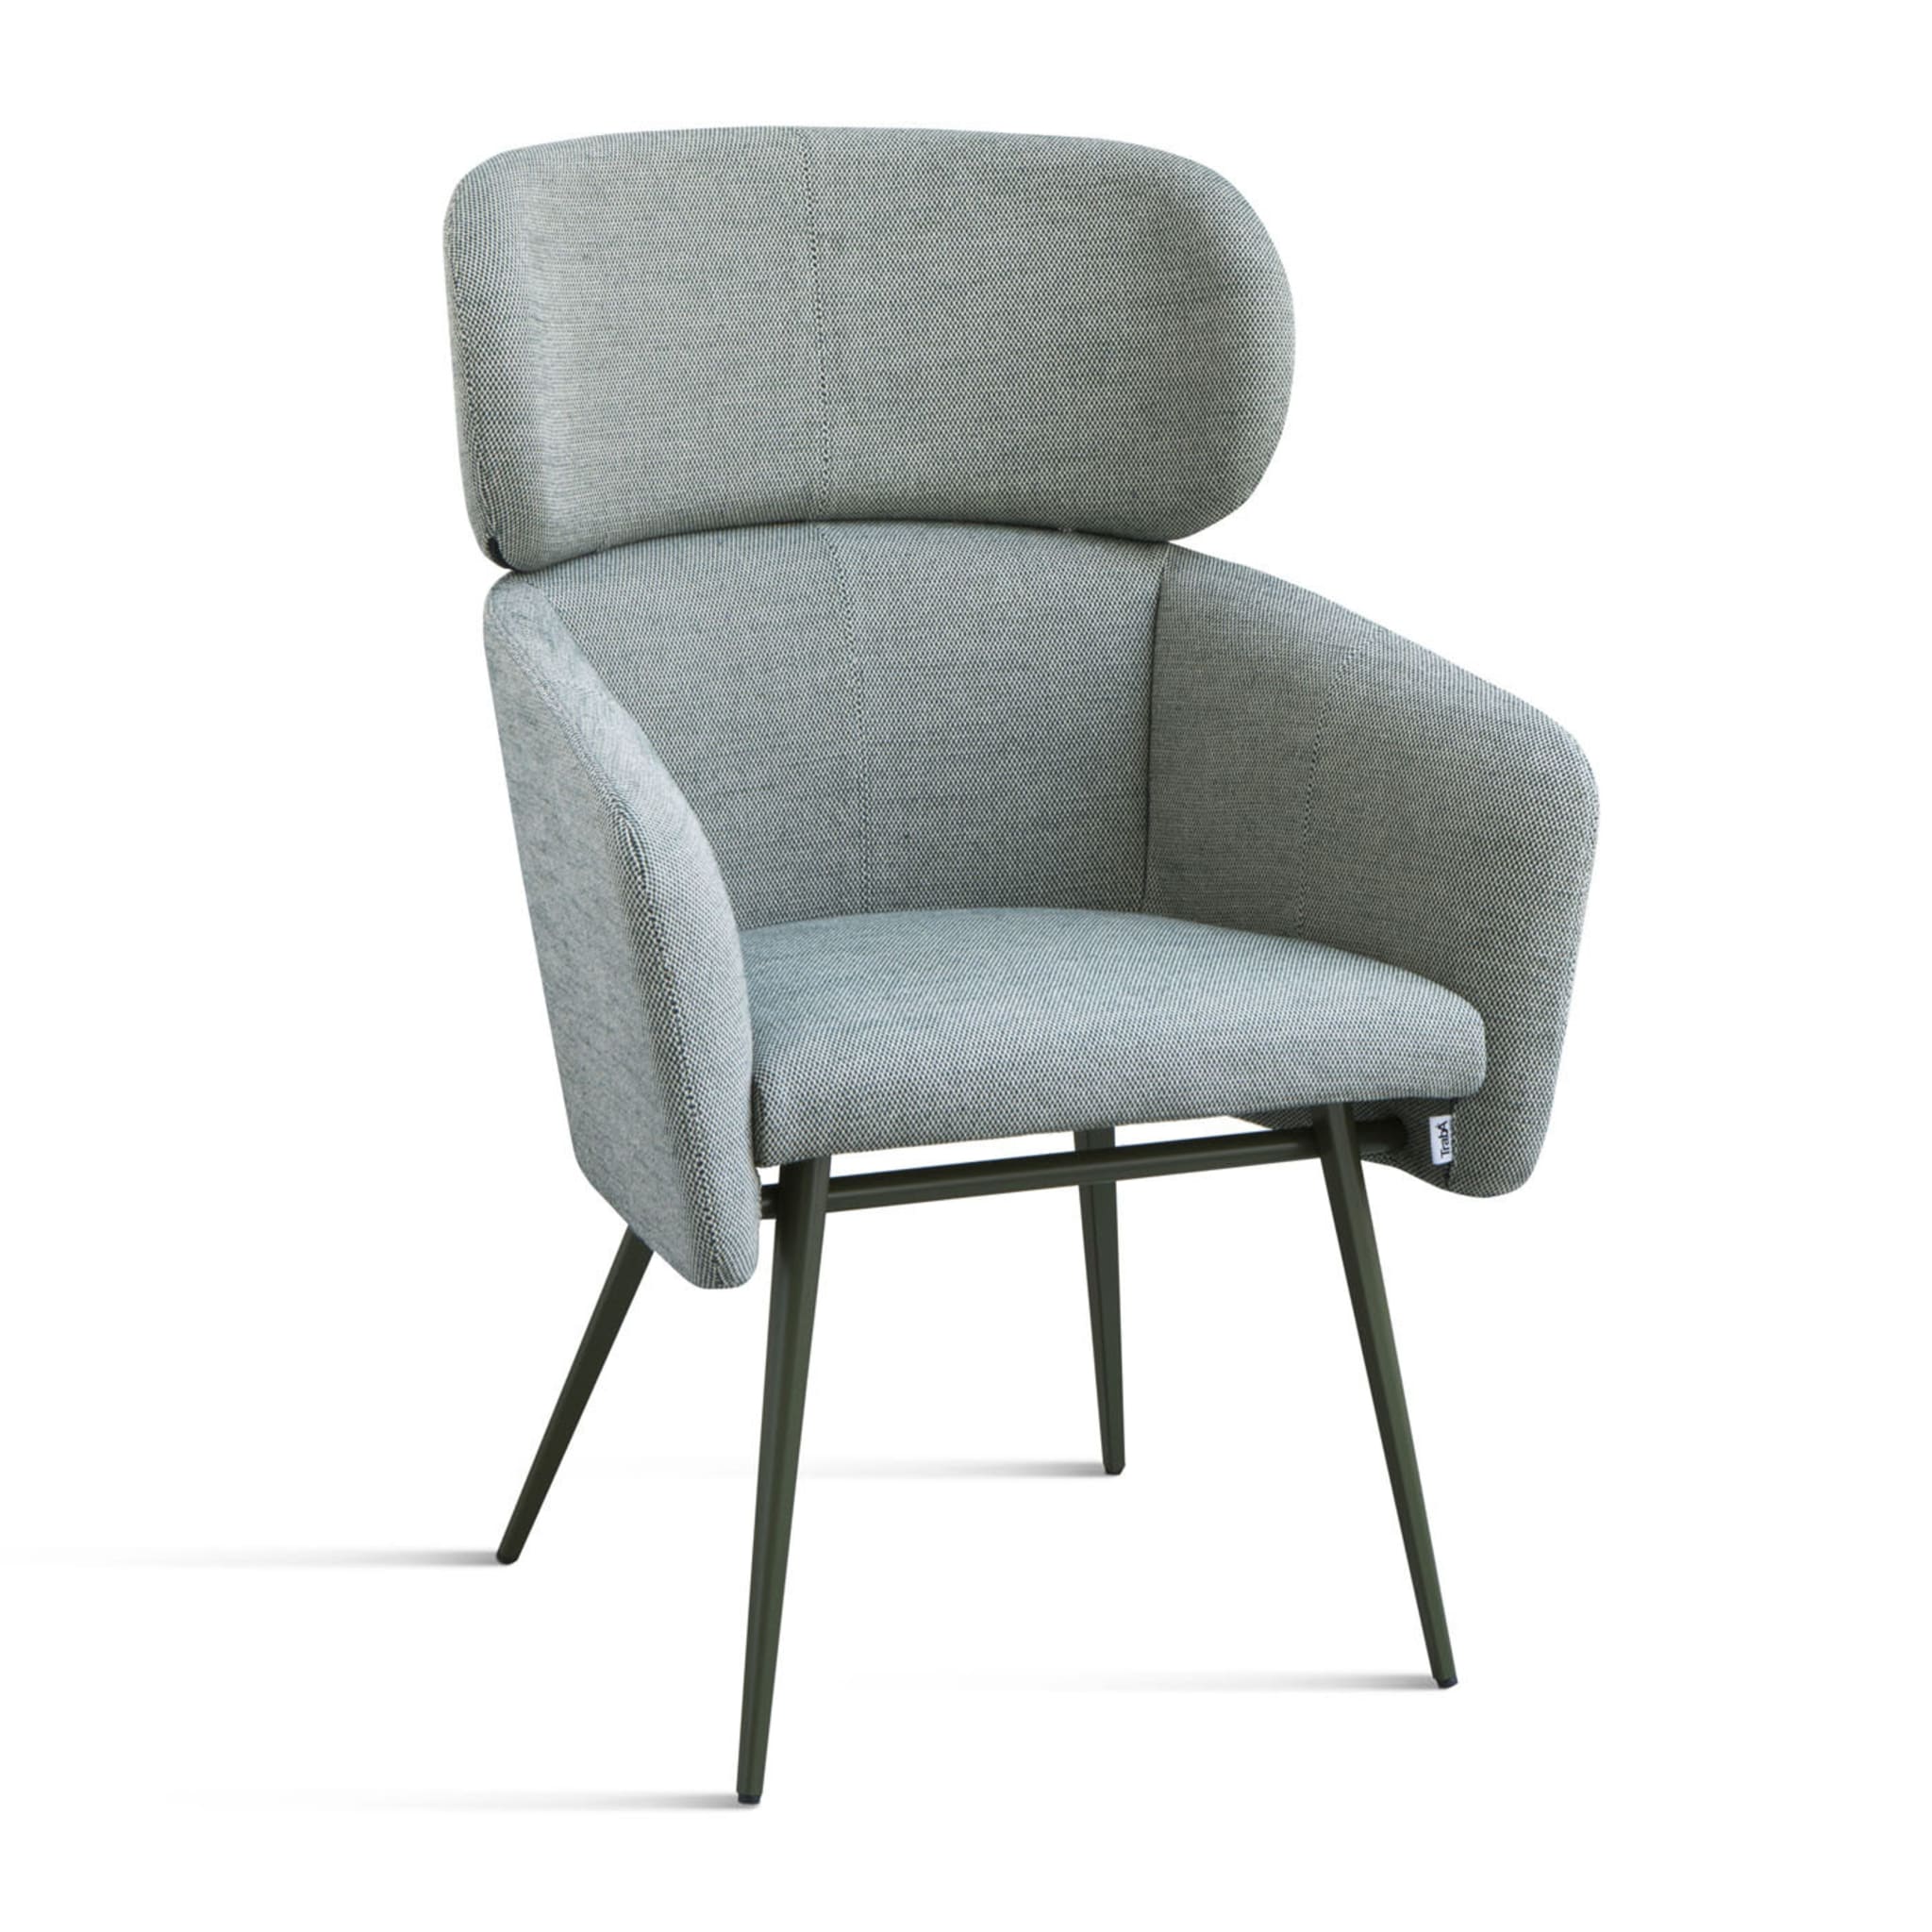 Balù XL Met Light Blue Chair By Emilio Nanni - Alternative view 1